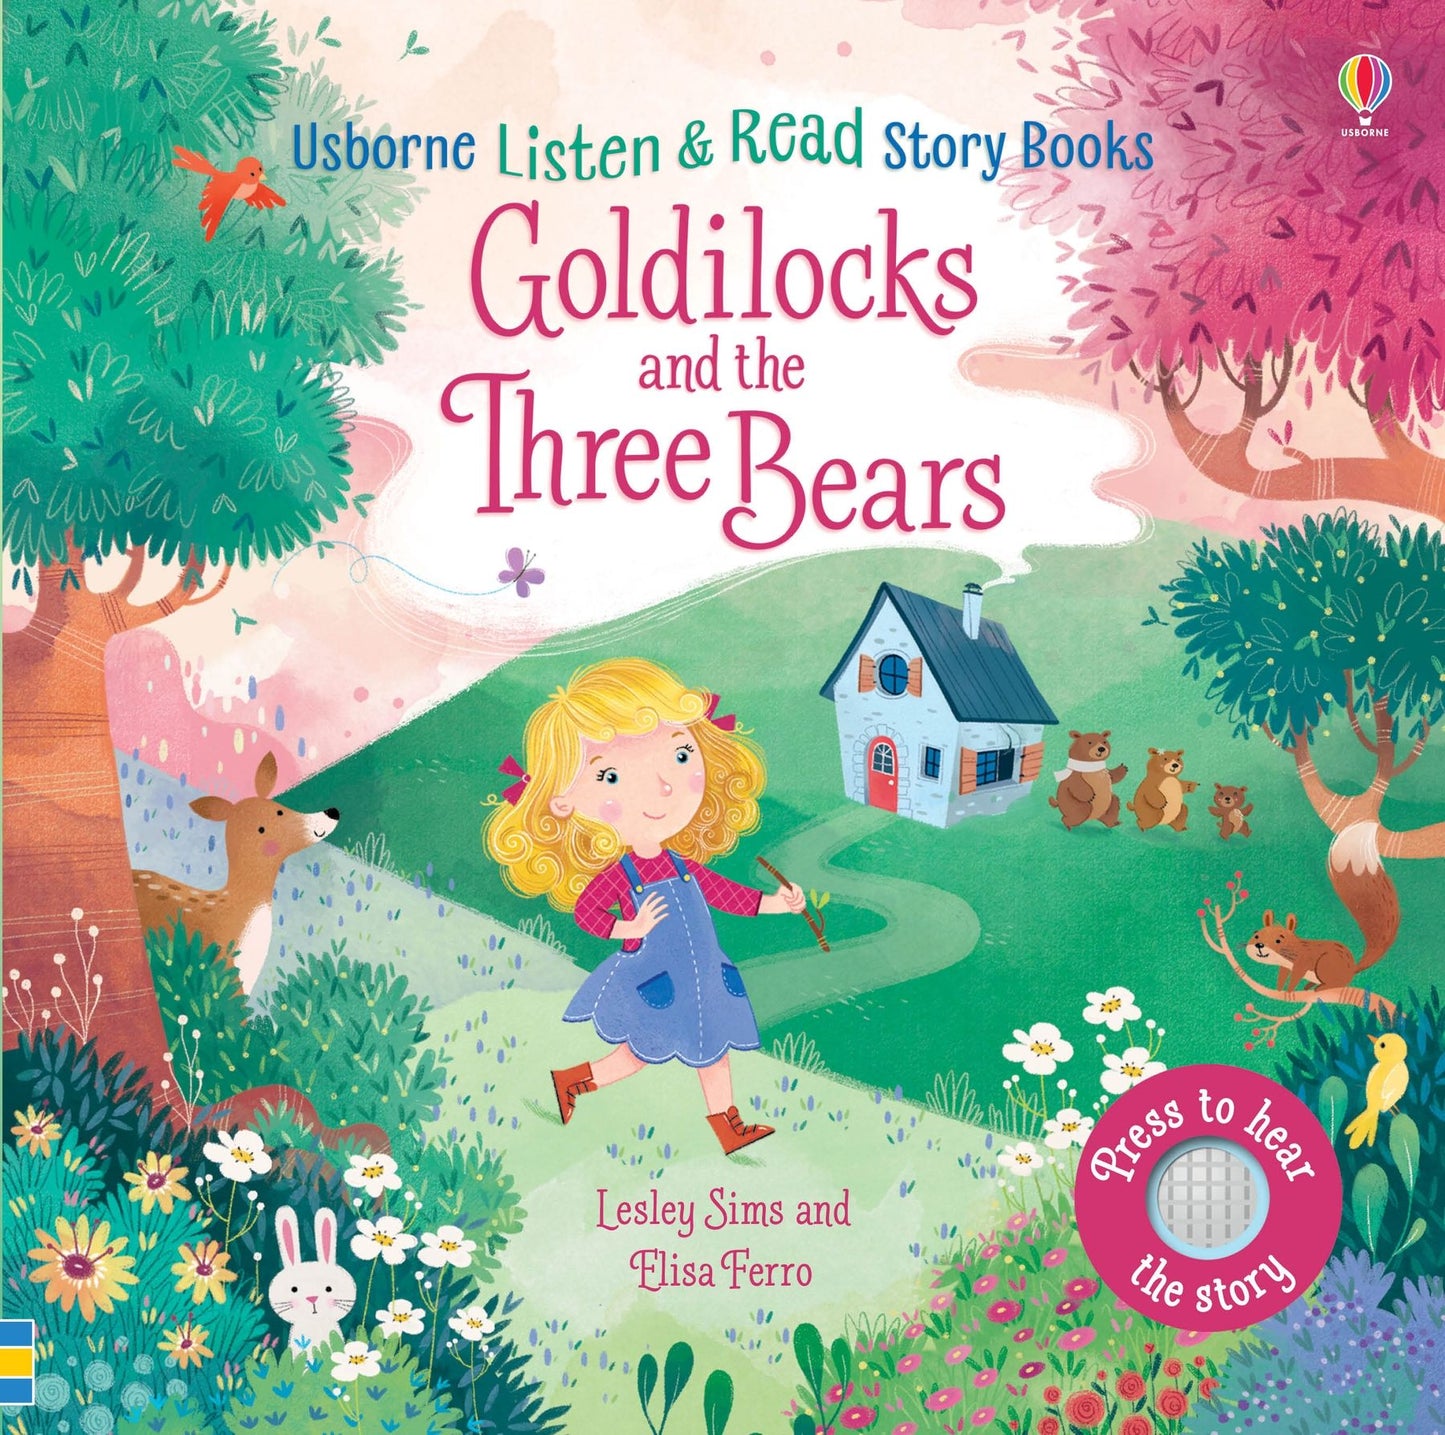 Goldilocks and the Three Bears - Listen & Read Story Books